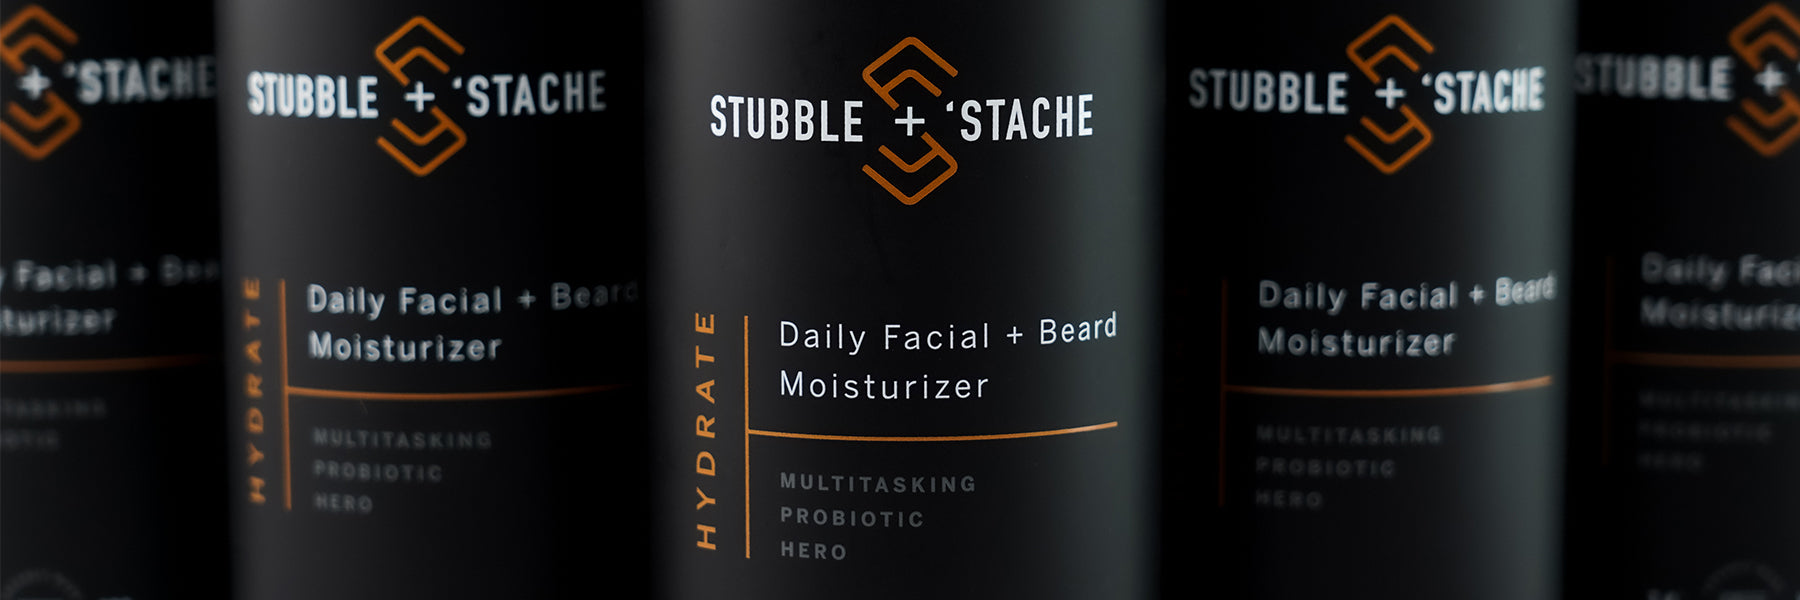 Hydrate: Daily Probiotic Facial + Beard Moisturizer for men. Moisturizer group shot. Men's skin care